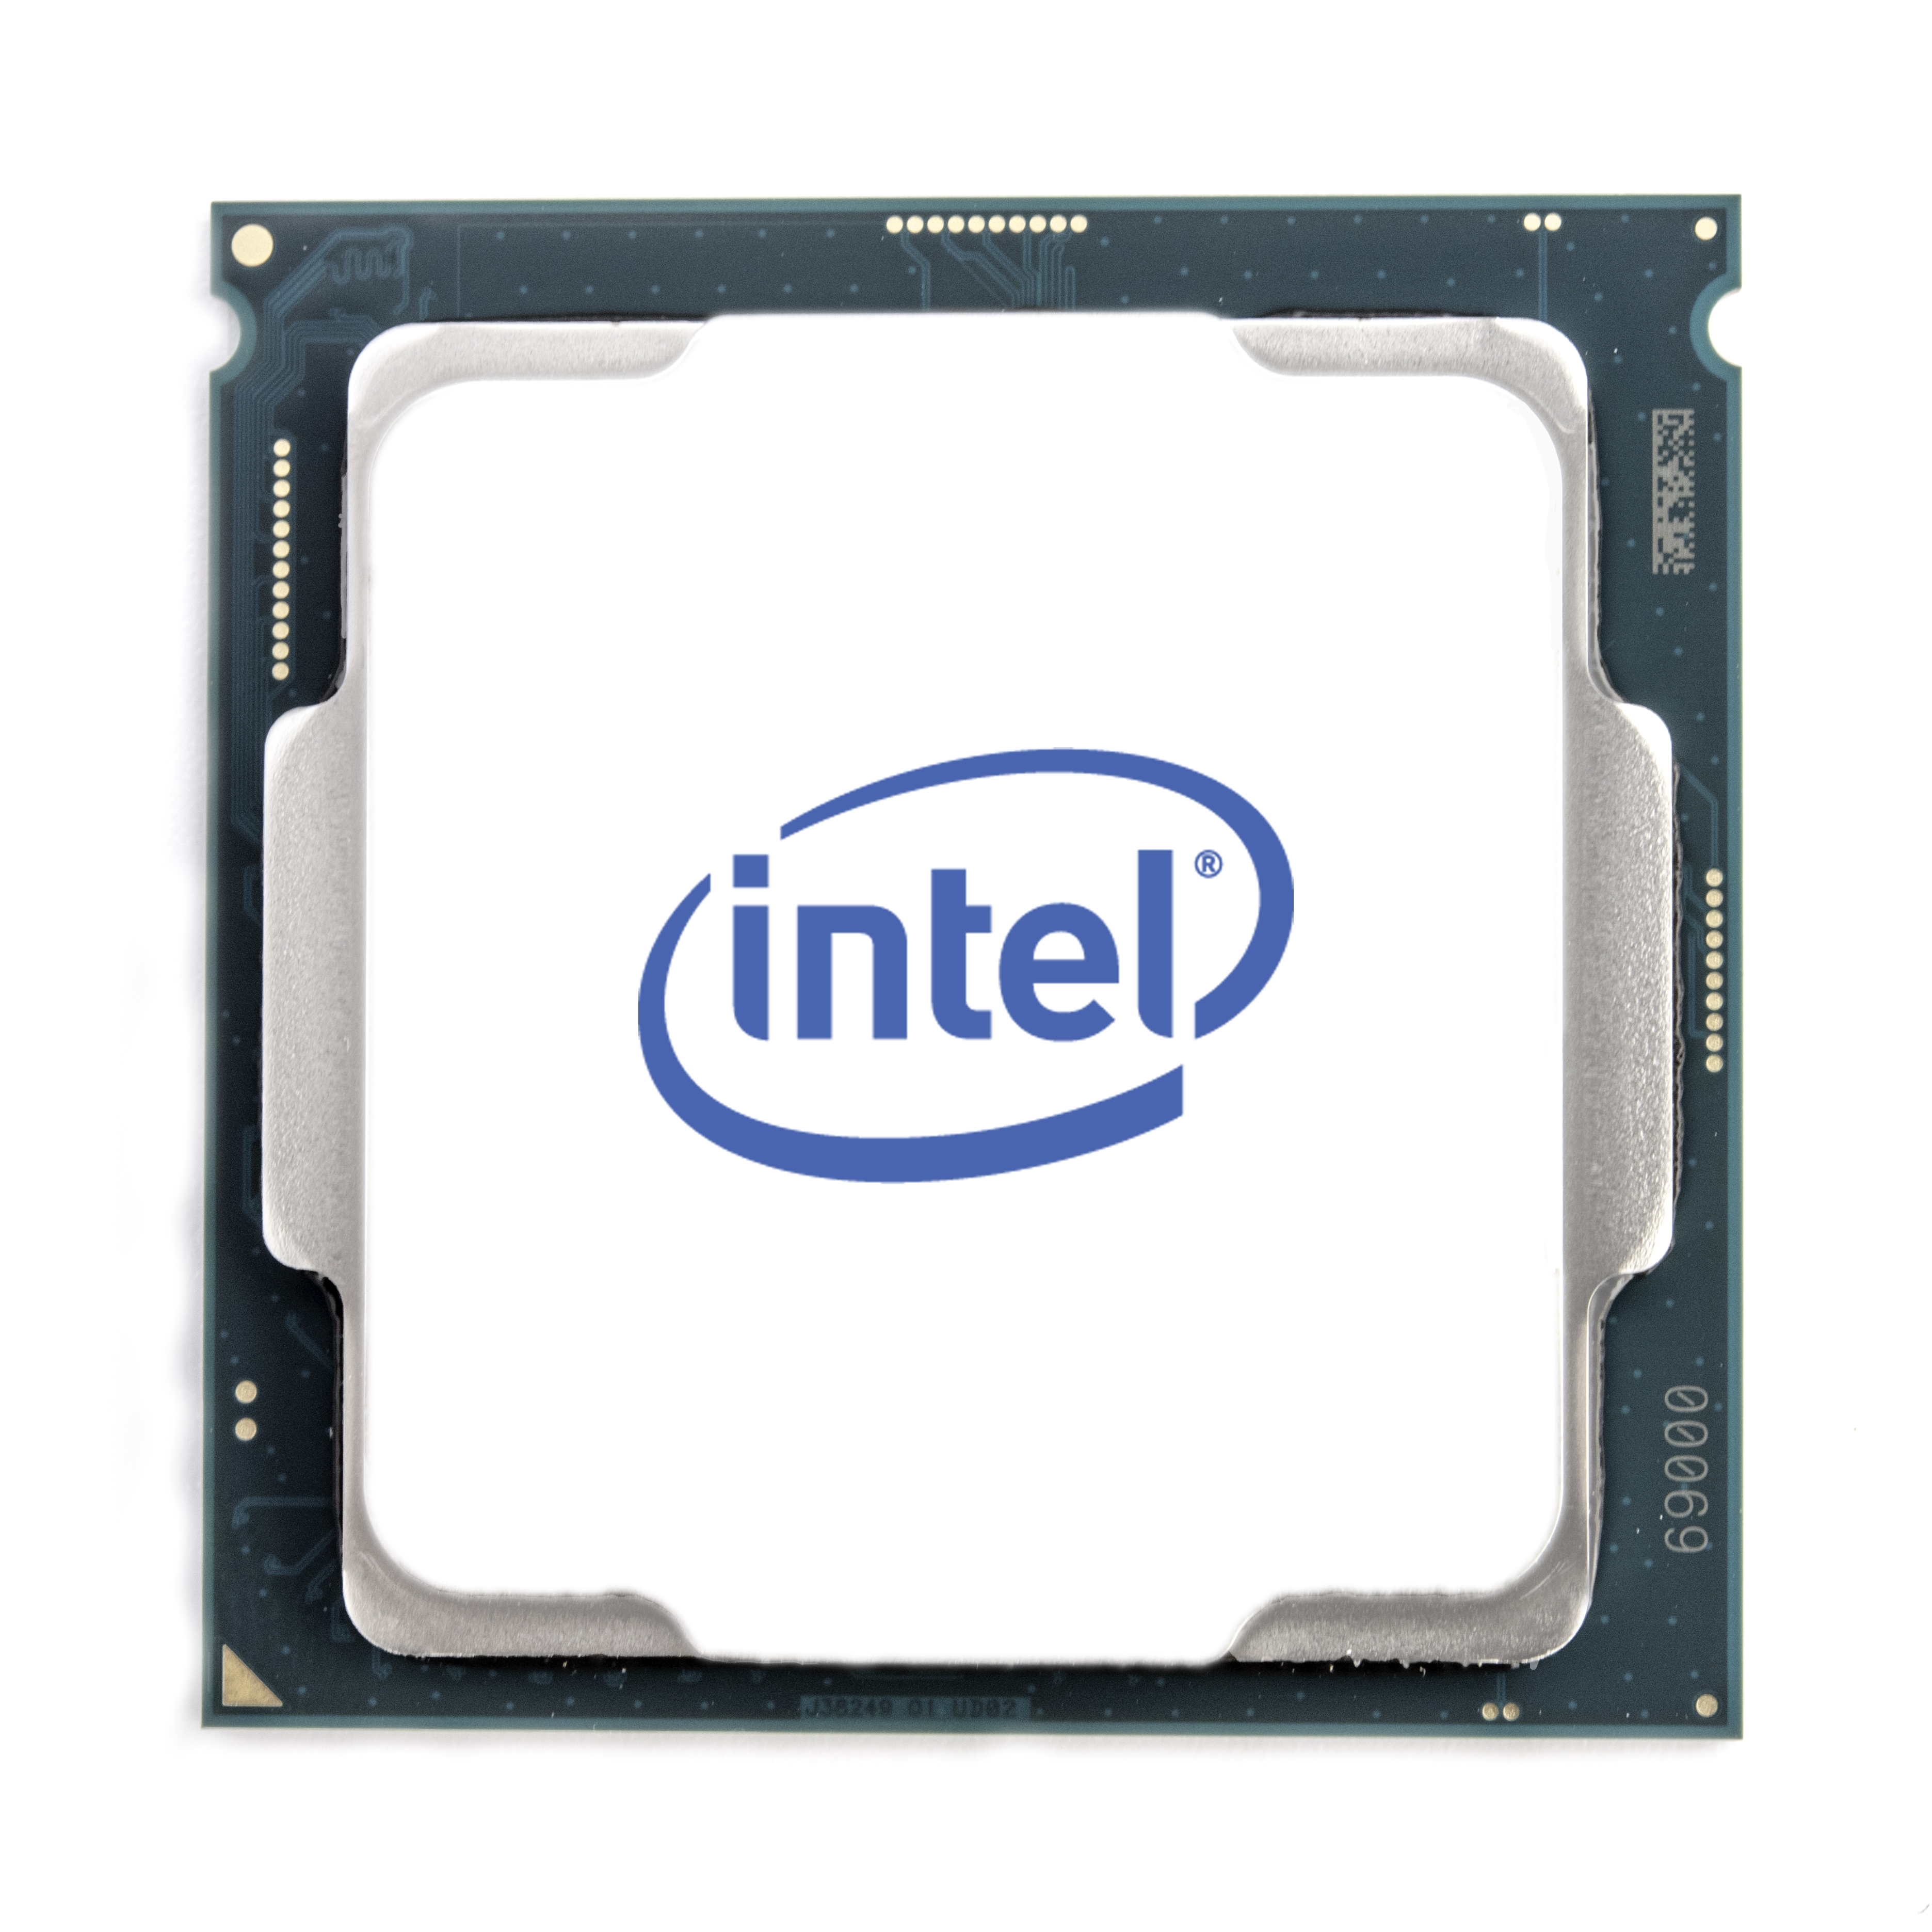 Fts - Server Acc                 Intel Xeon Silver 4309y 8c 2.80     Ghz                                 Py-cp62xg